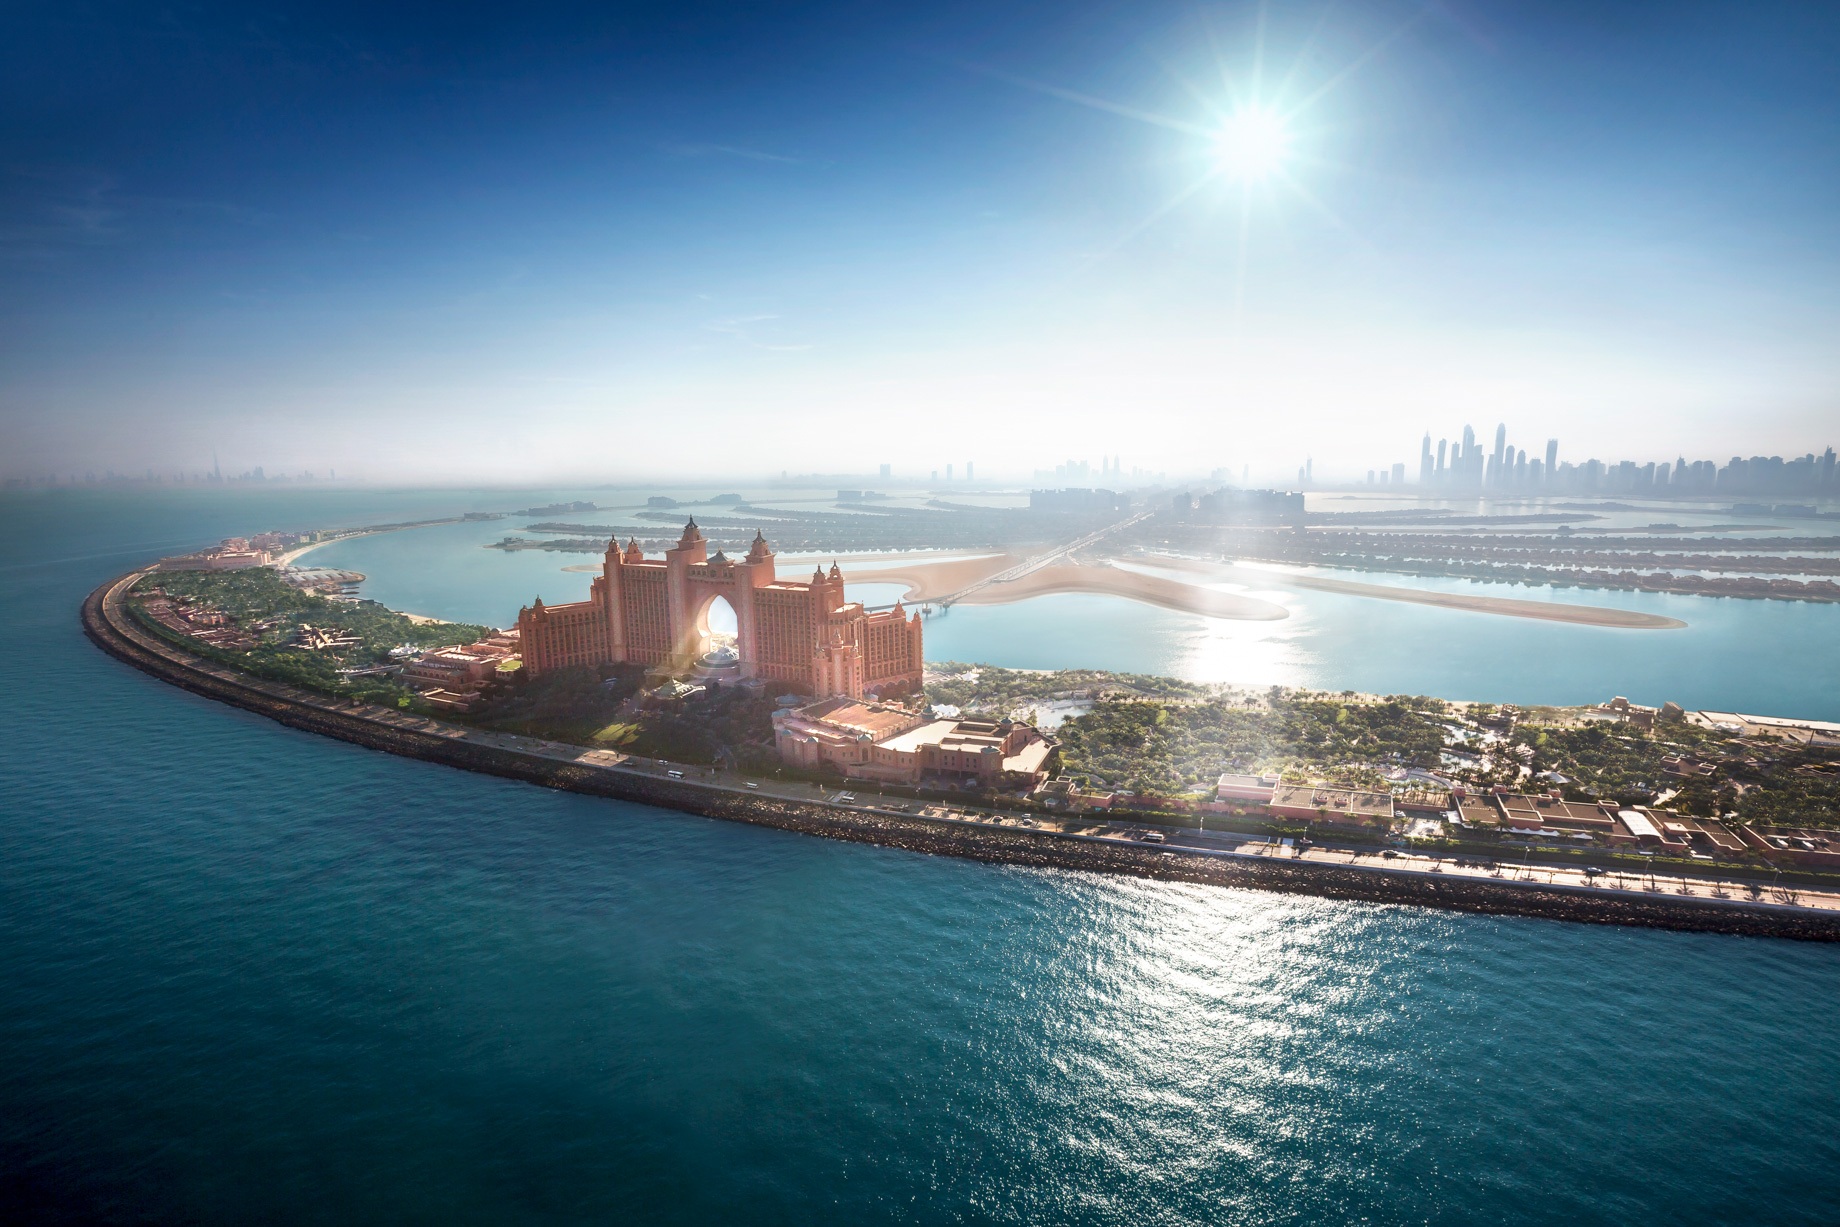 Atlantis The Palm Resort – Crescent Rd, Dubai, UAE – Resort Aerial